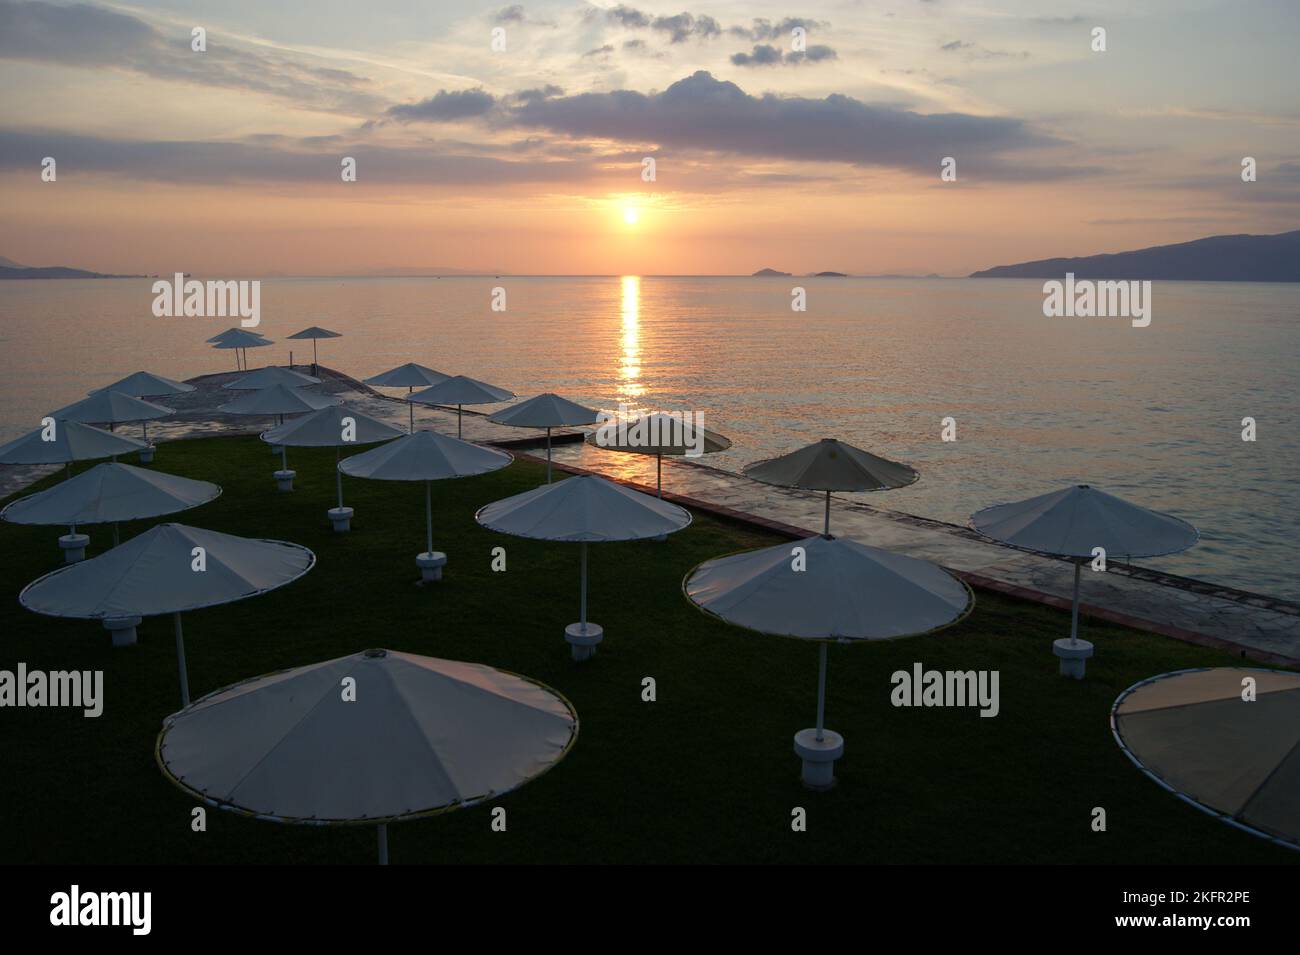 Beach umbrellas, view of the sun setting in the Aegean sea, orange sky background, at Kalamaki Beach, Saronic Gulf of the Aegean, Isthmia, Greece Stock Photo